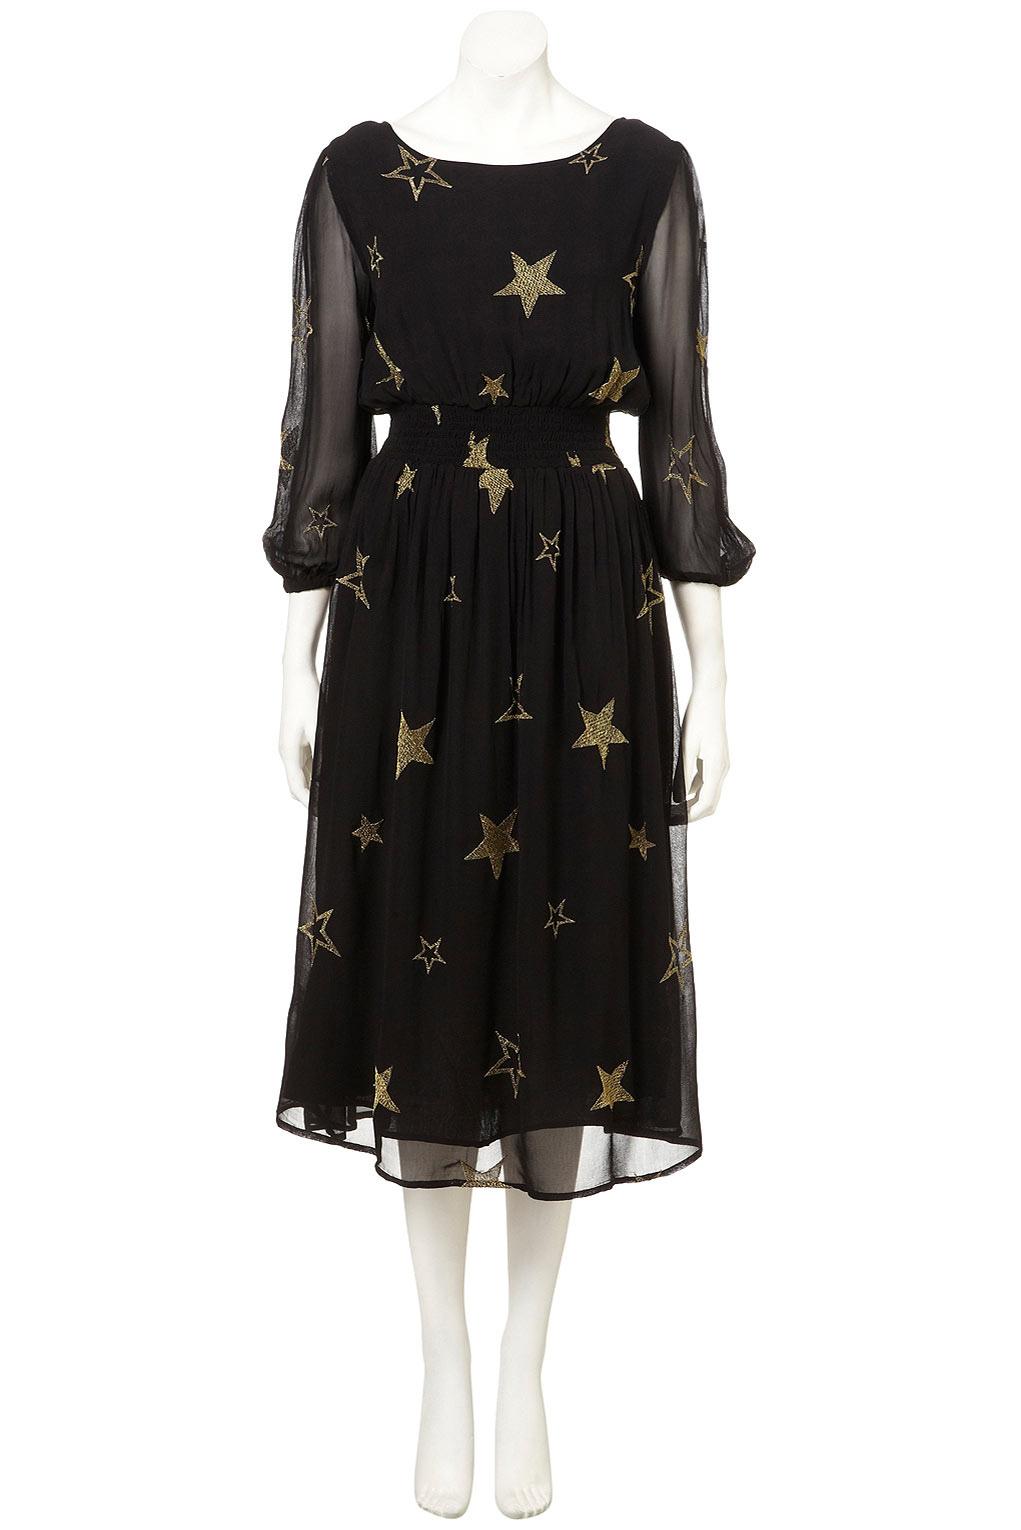 topshop black star dress